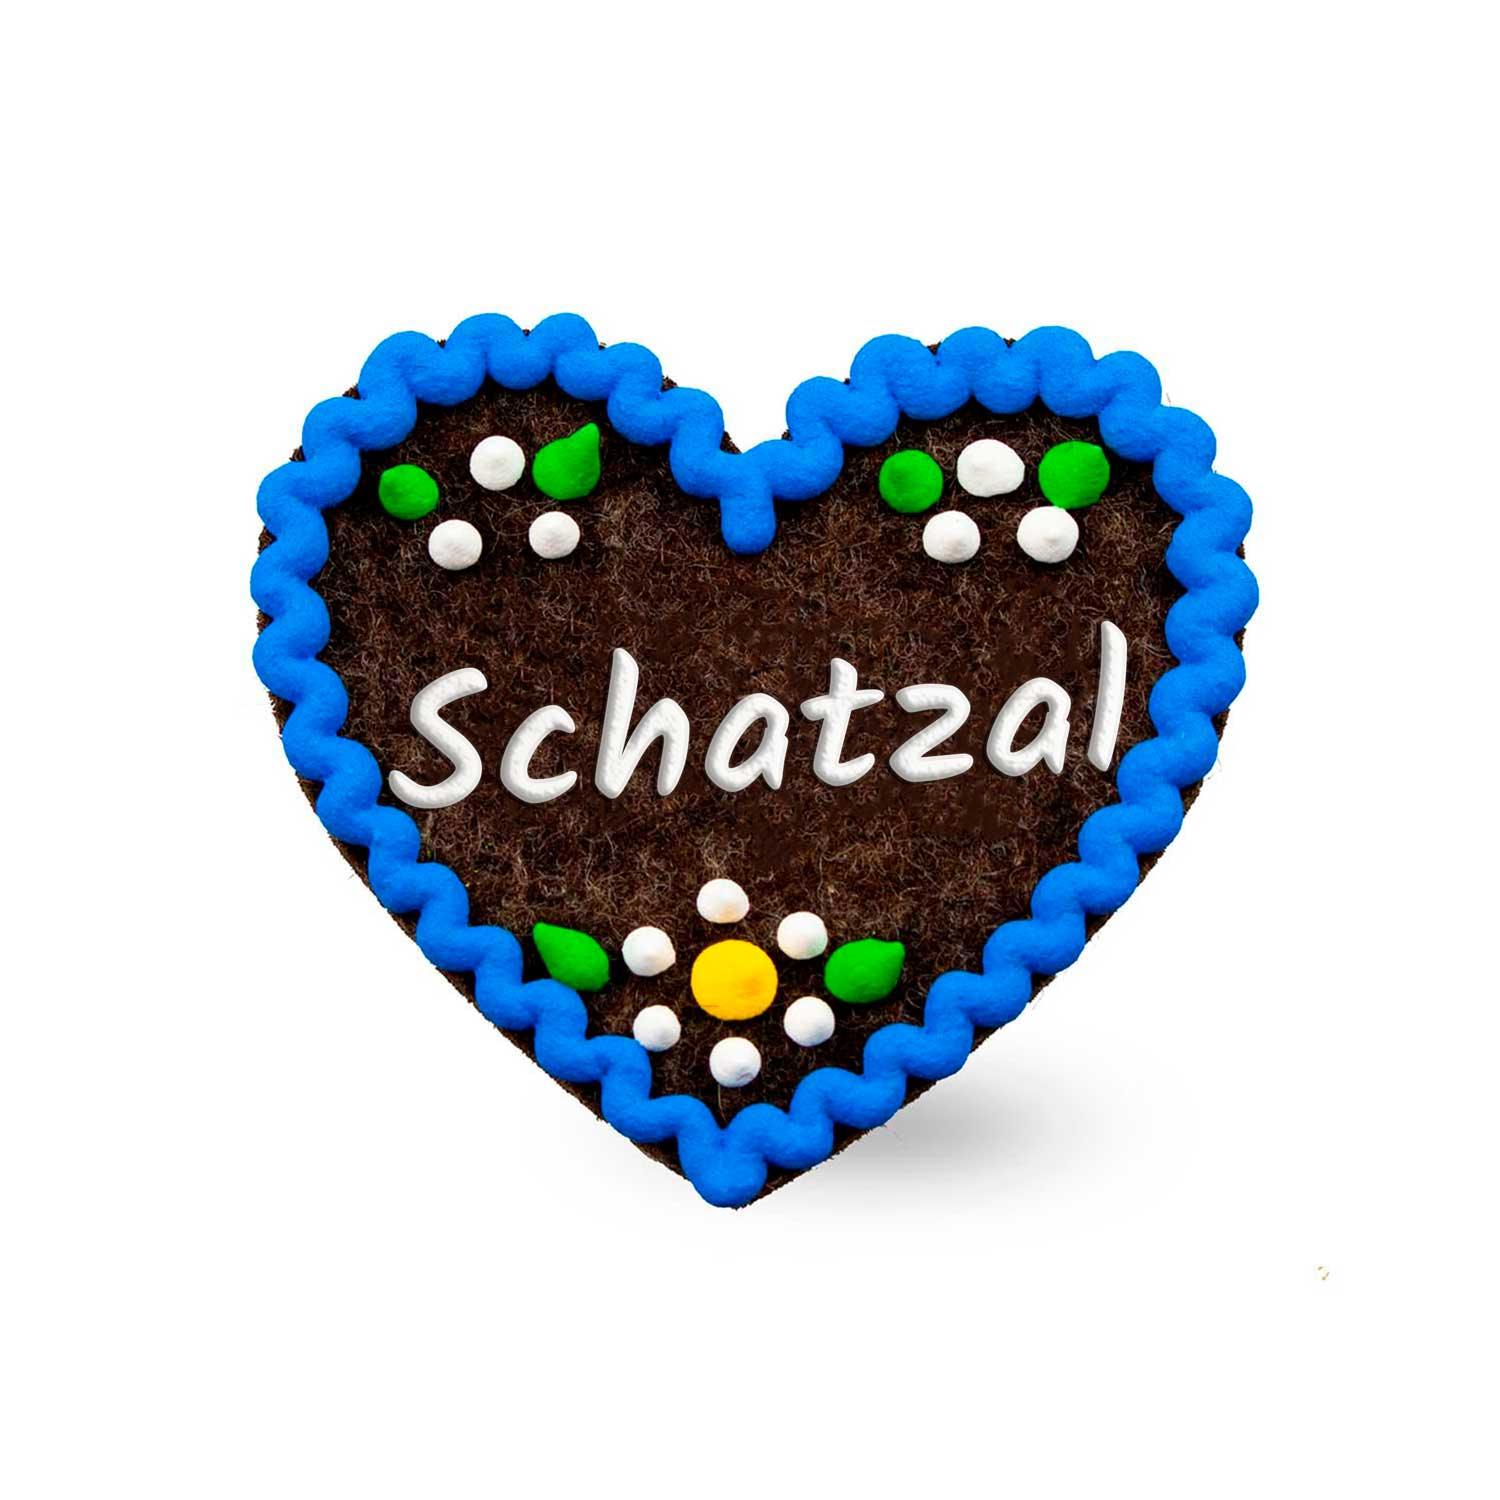 Filzherz-Anstecker "Schatzal" - bavariashop - mei LebensGfui